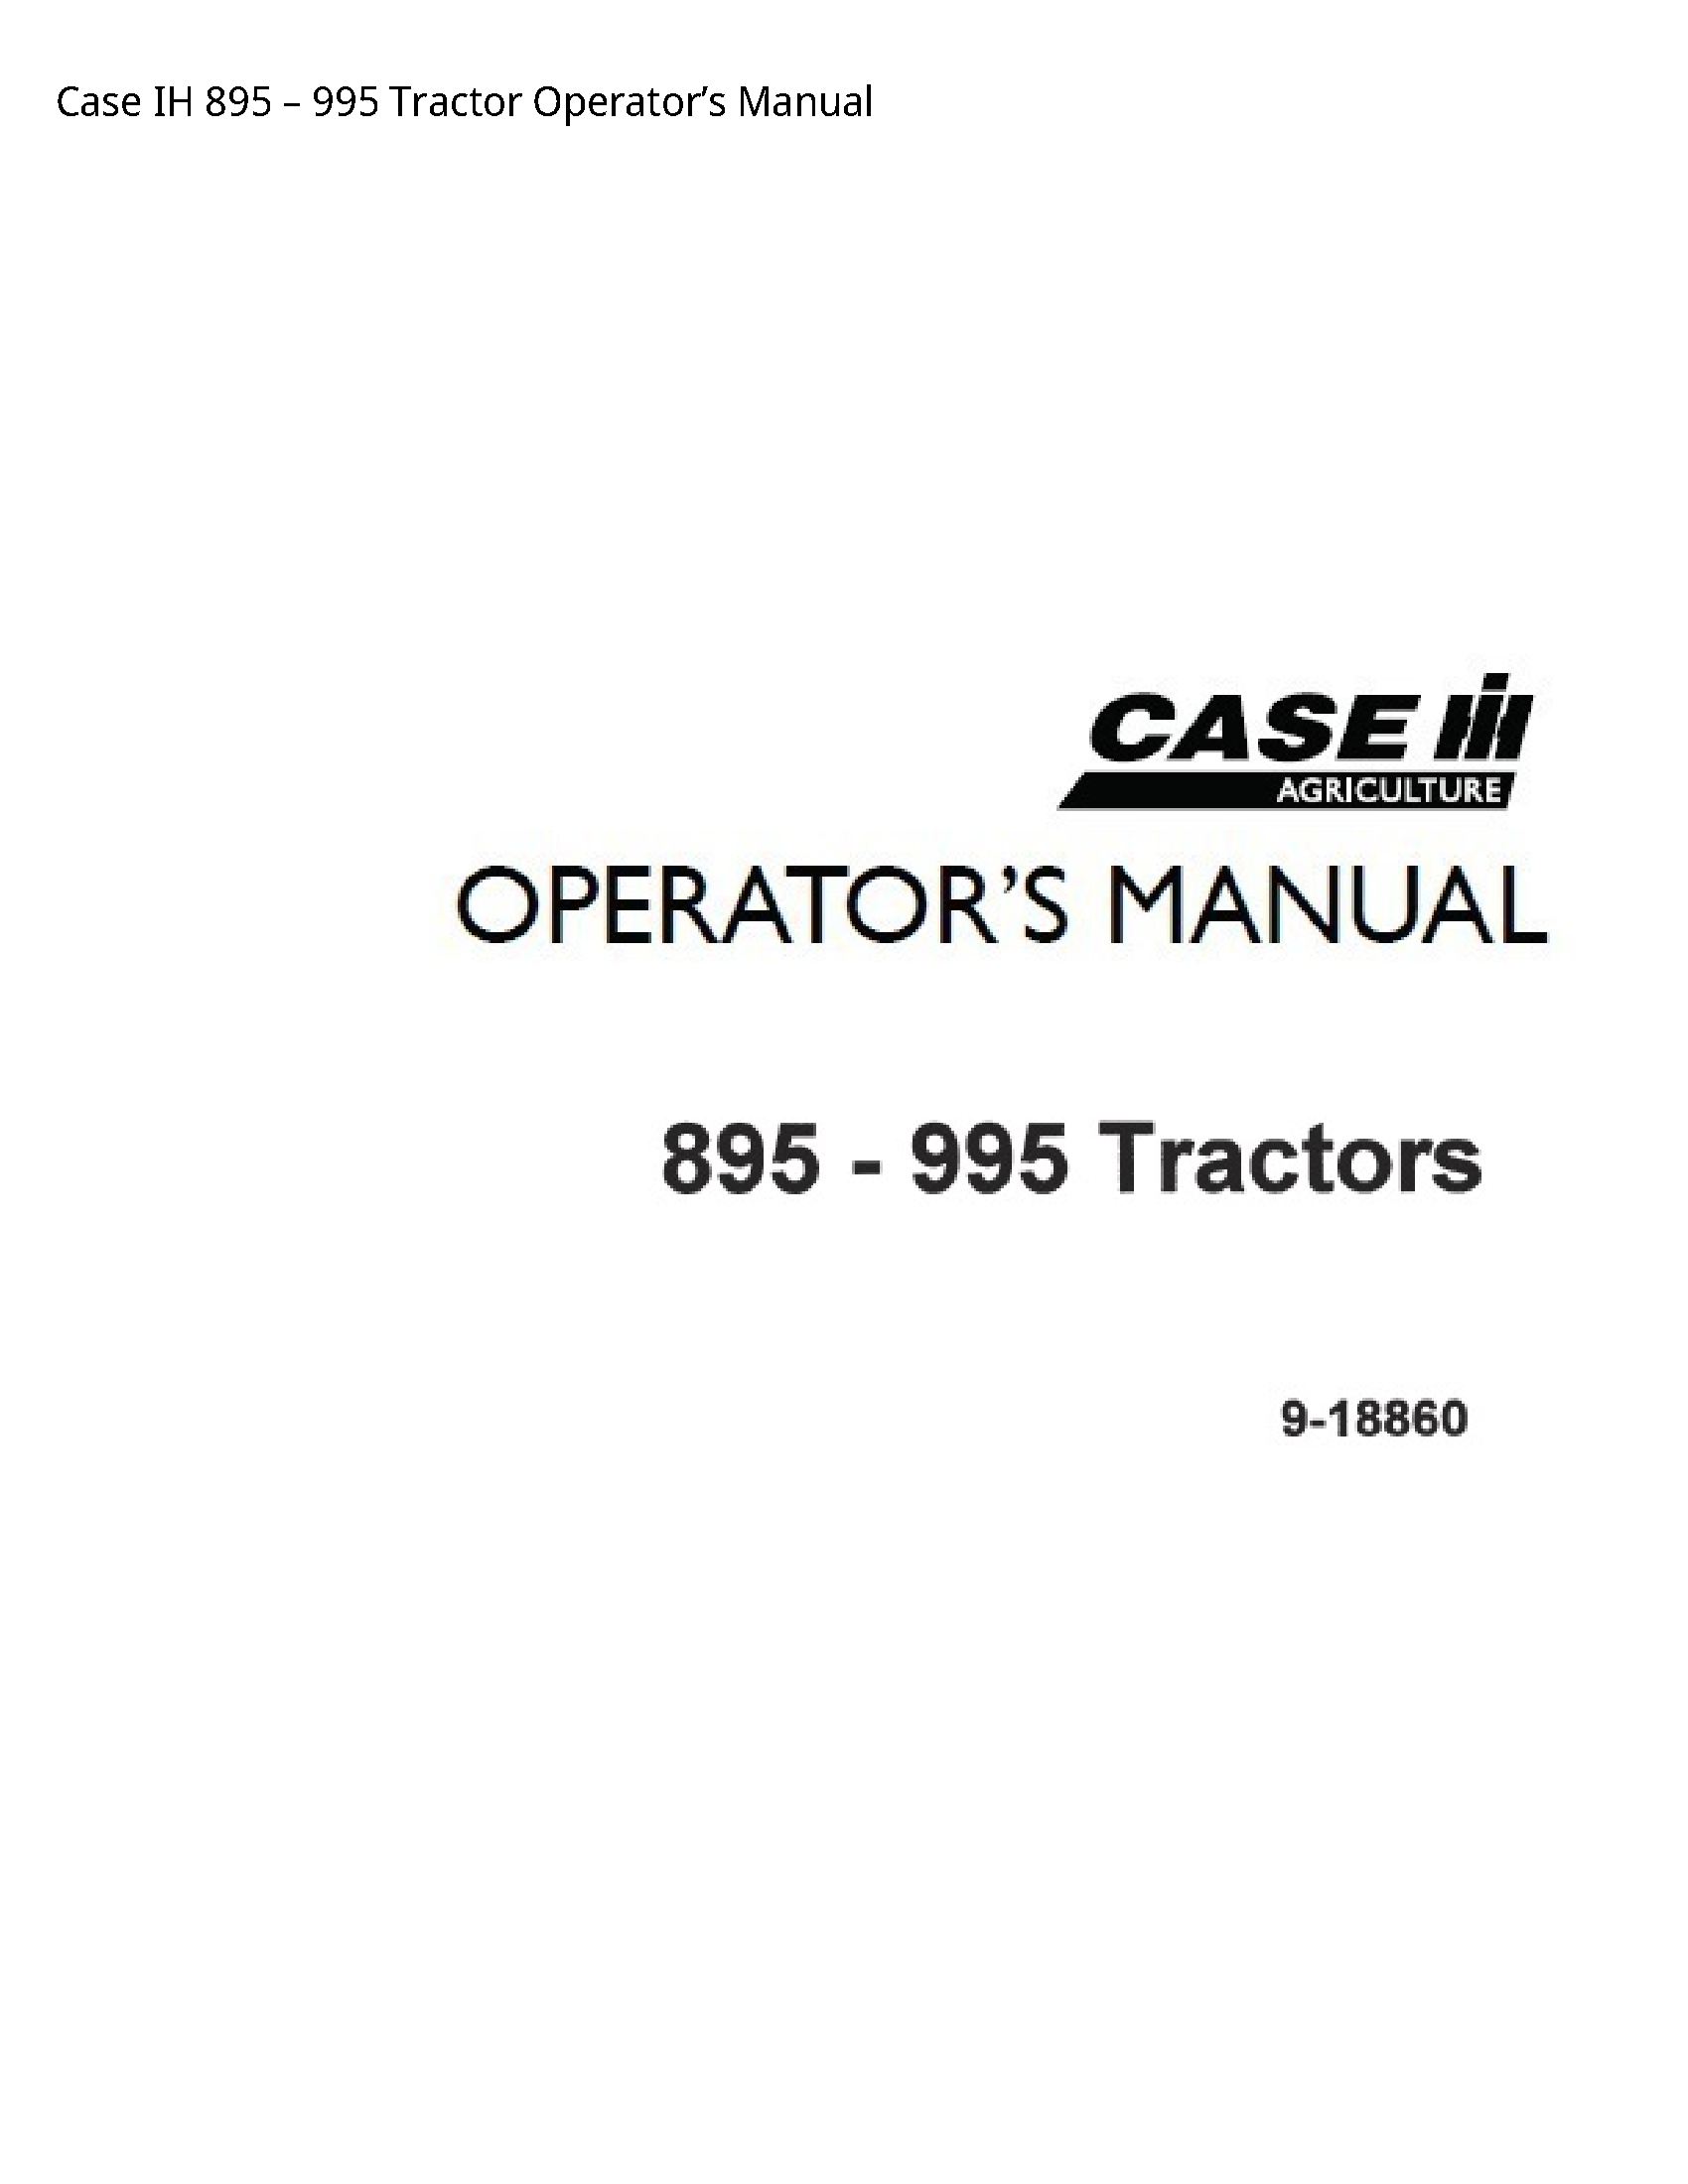 Case/Case IH 895 IH Tractor Operator’s manual